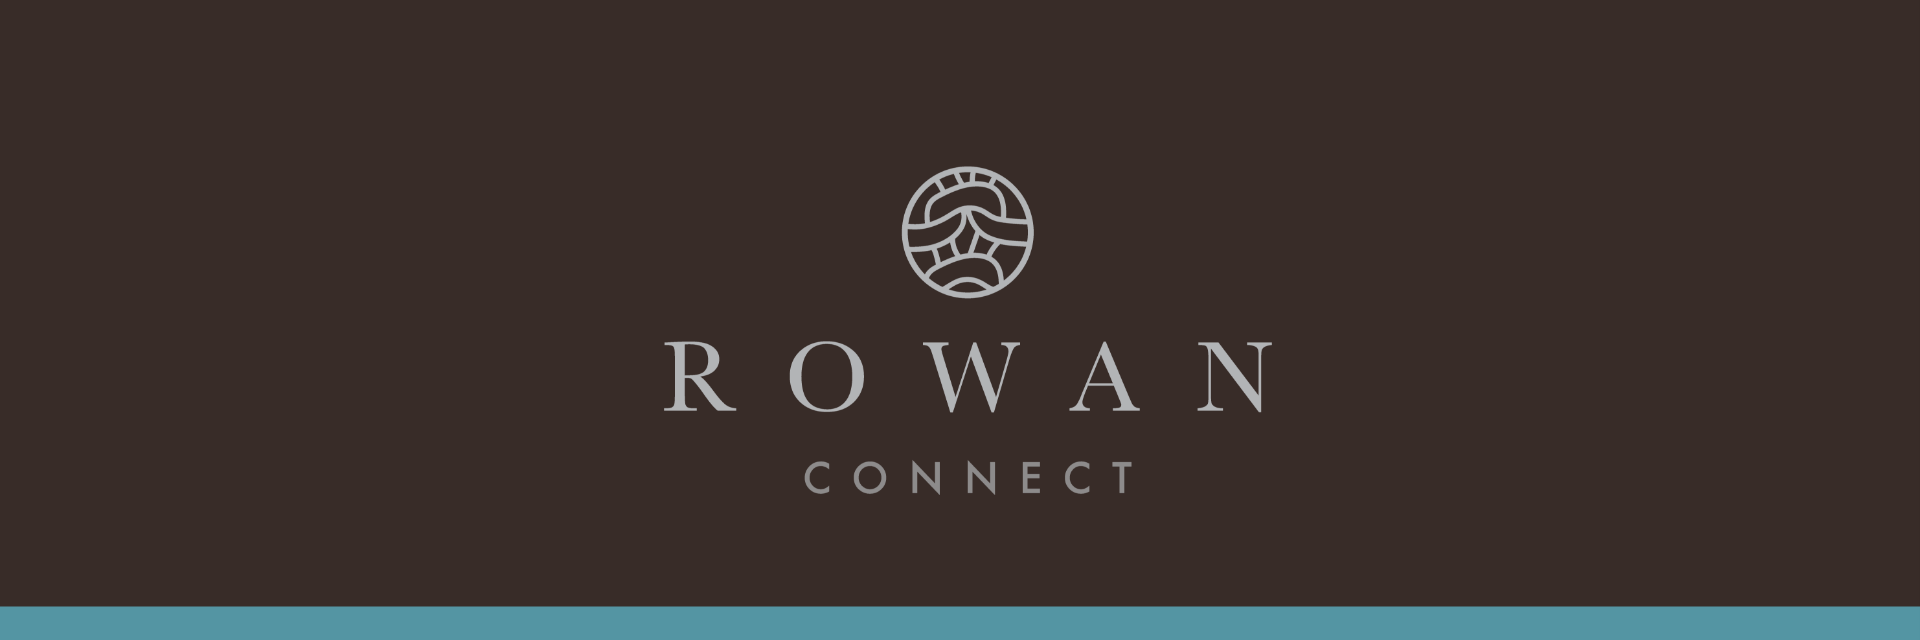 Rowan Connect Hero Banner